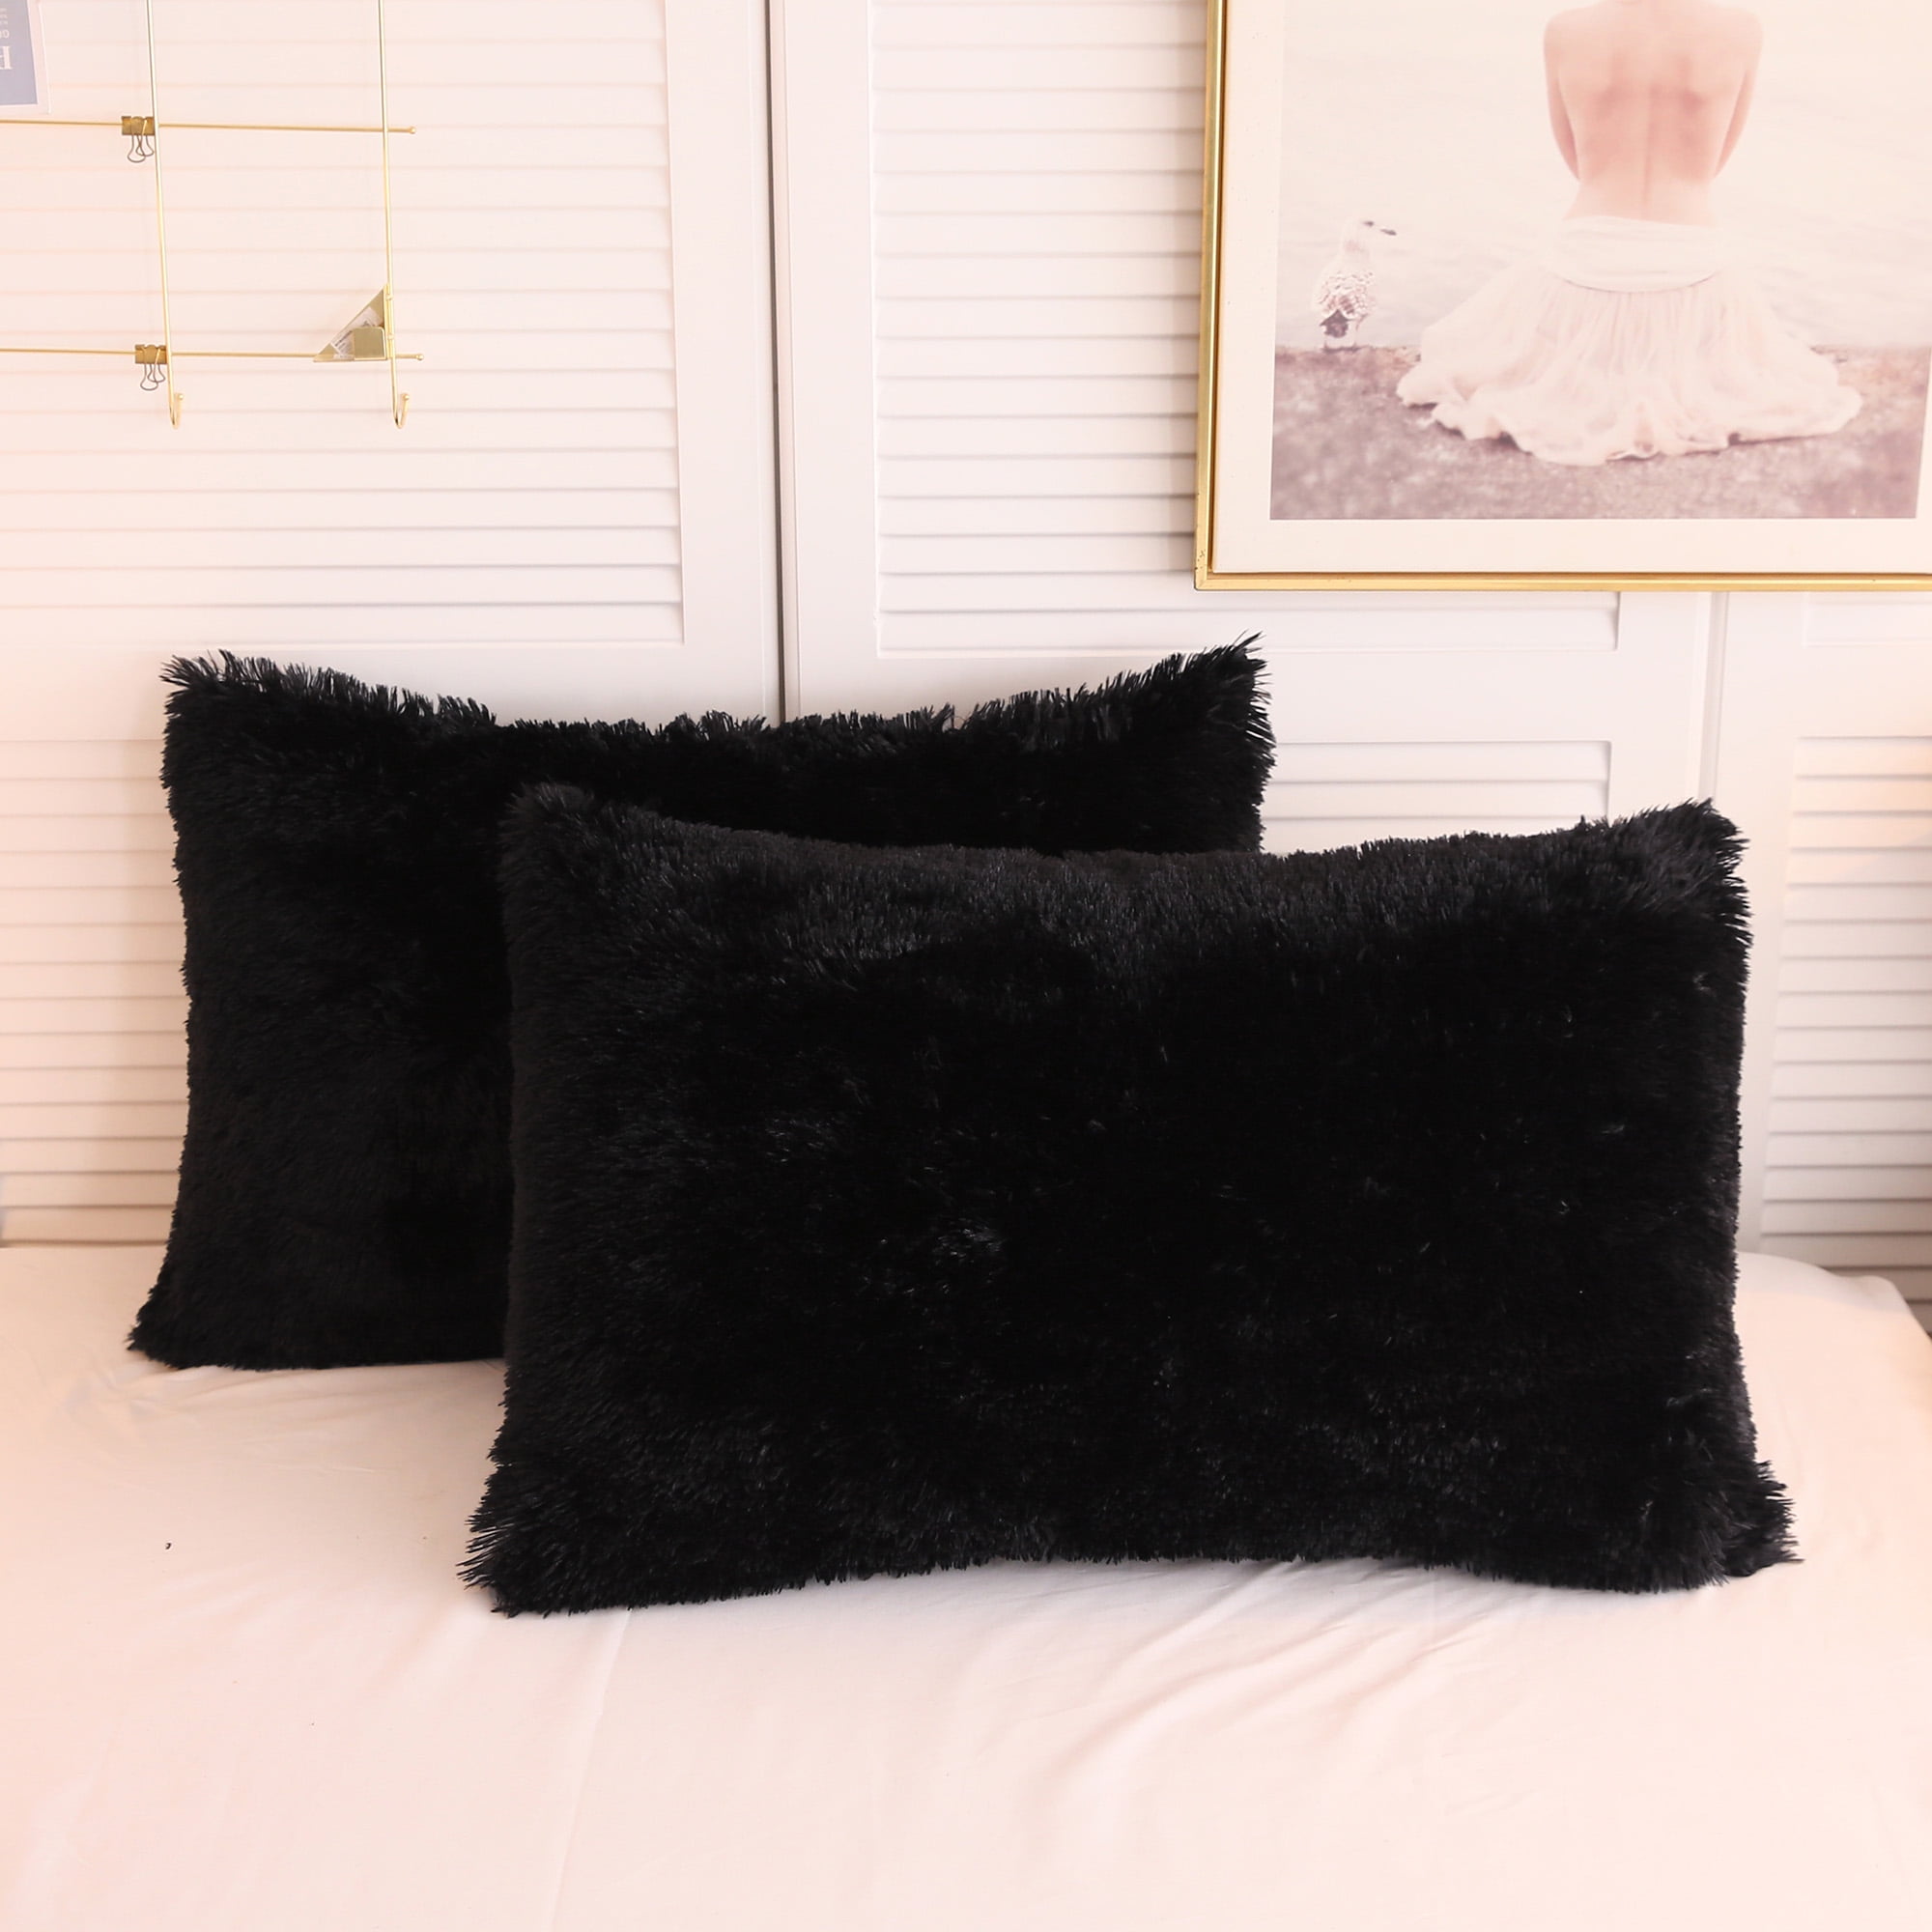 XOLLOZ, Lash Bed Mattress + Bed Cover + Pillow (Black)